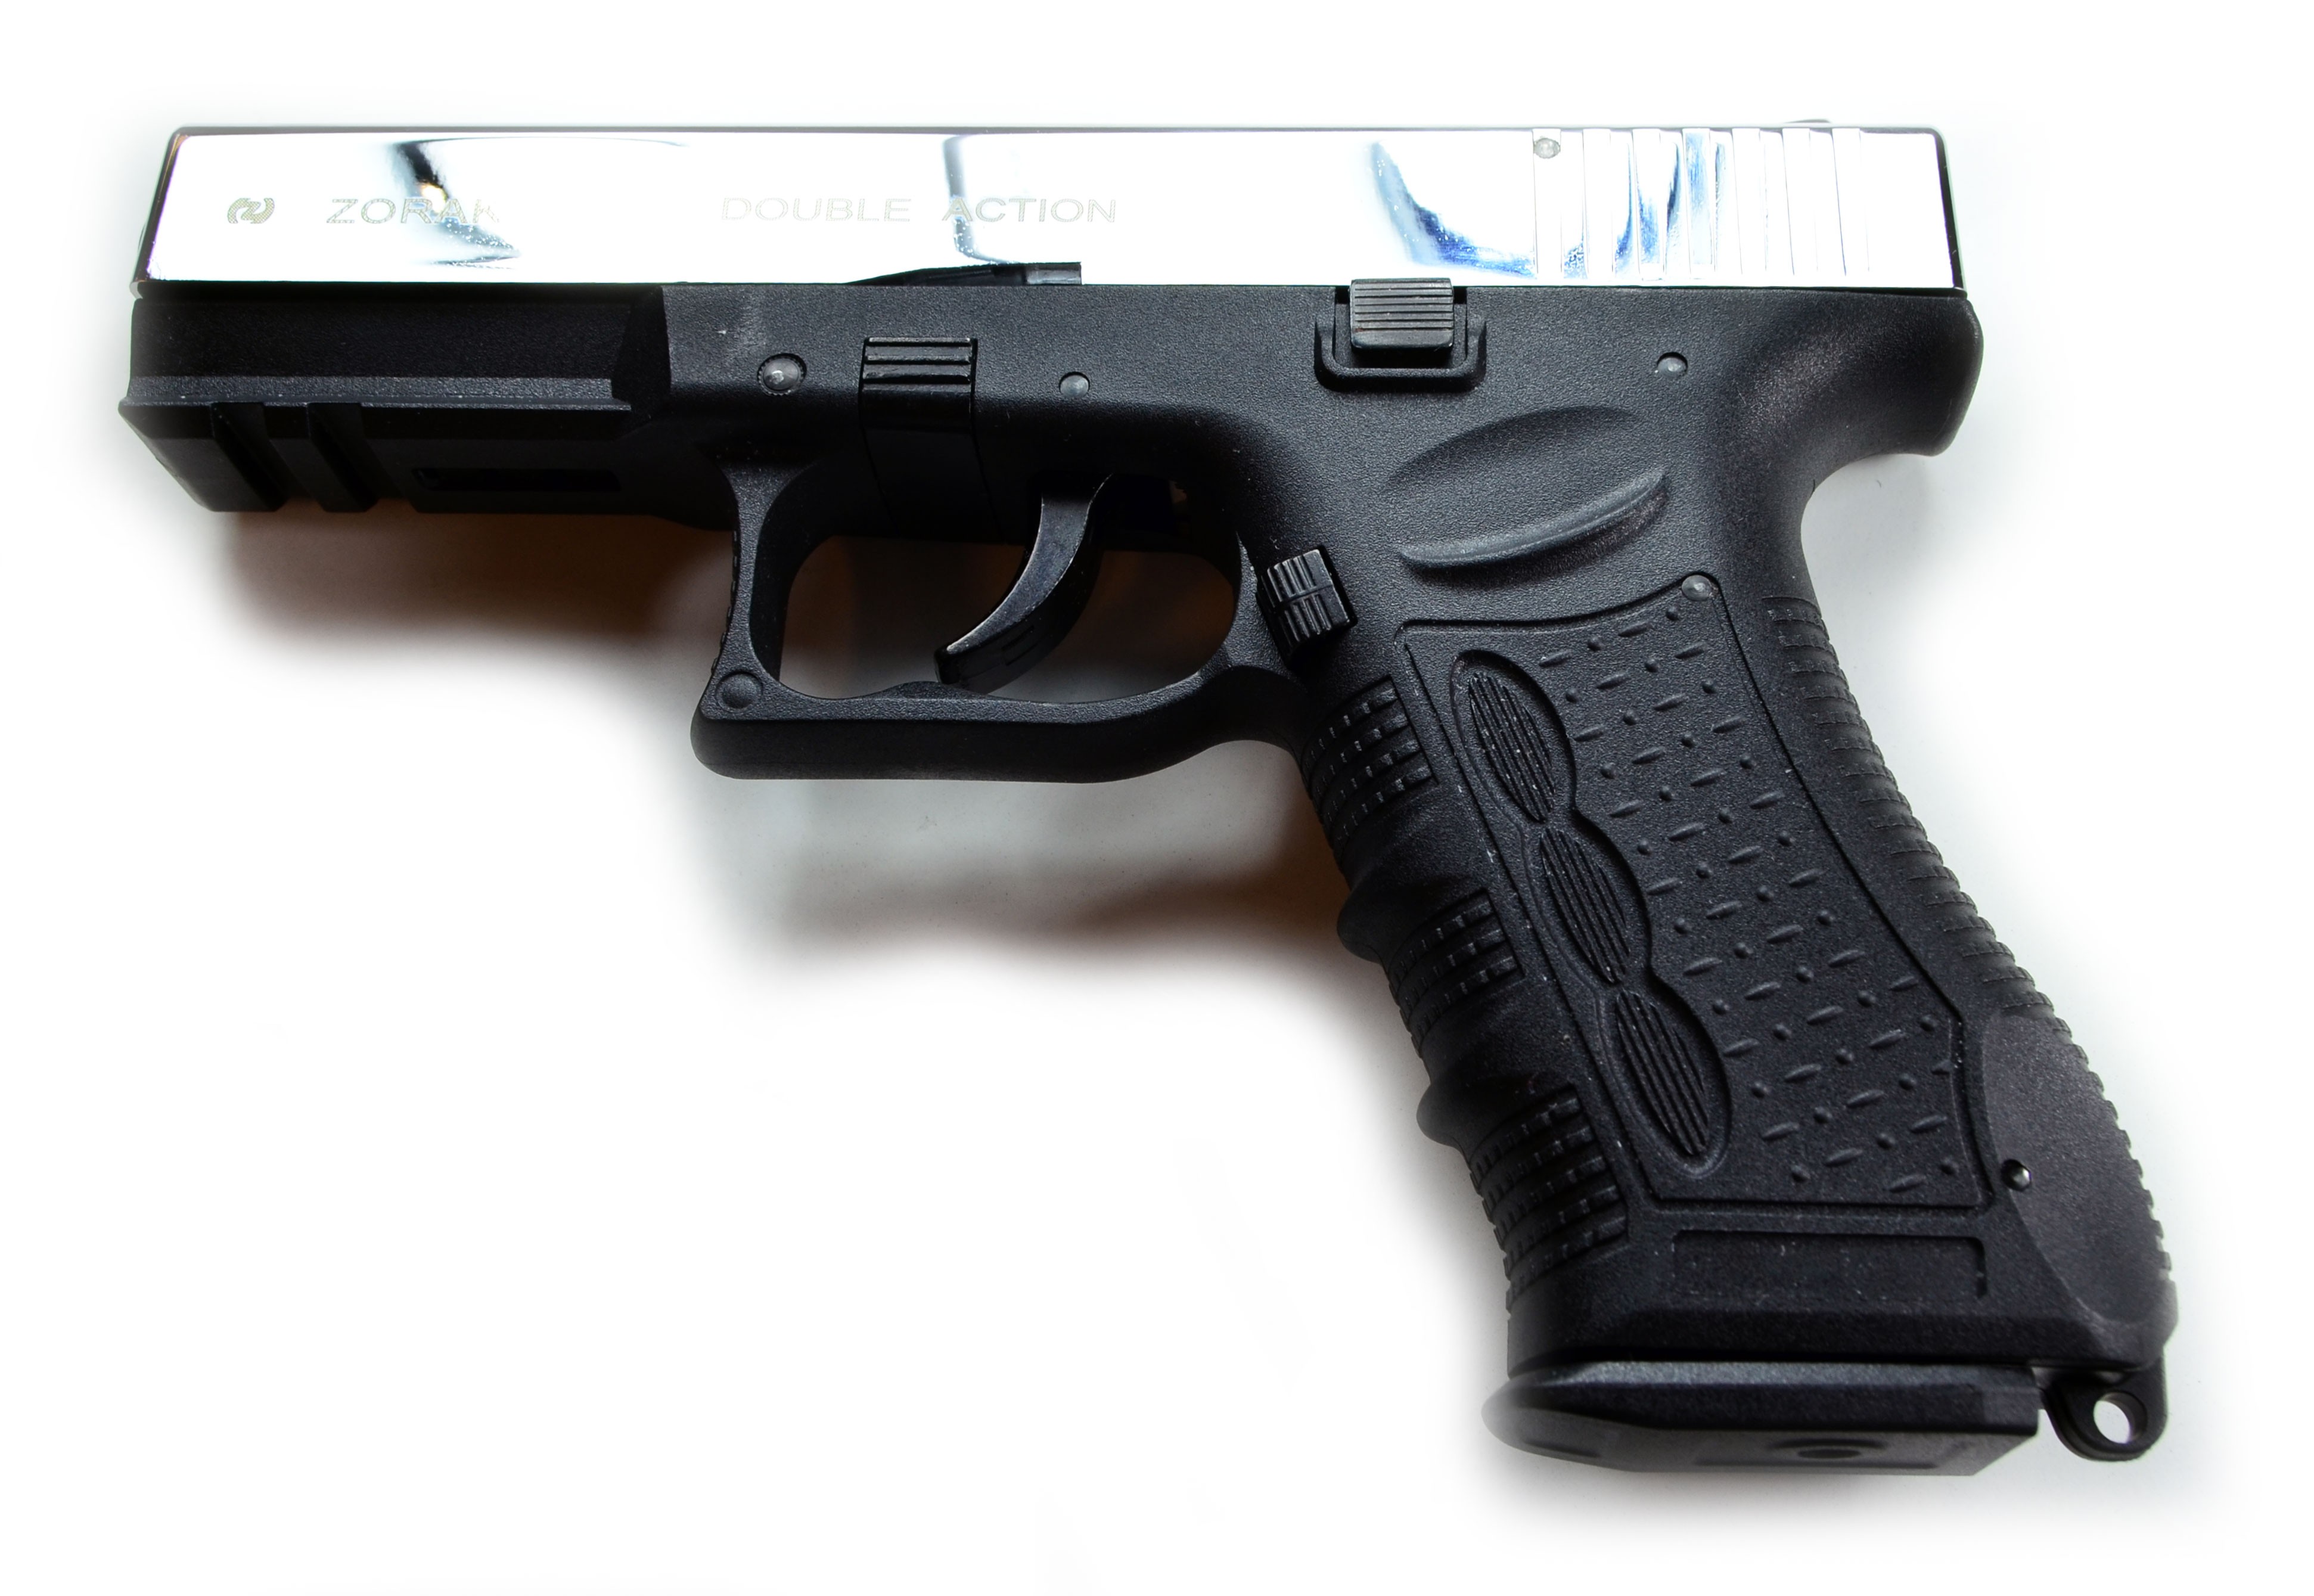 Pistola Fogueo Zoraki Glock 917 + 5 municiones 9mm – Geoutdoor